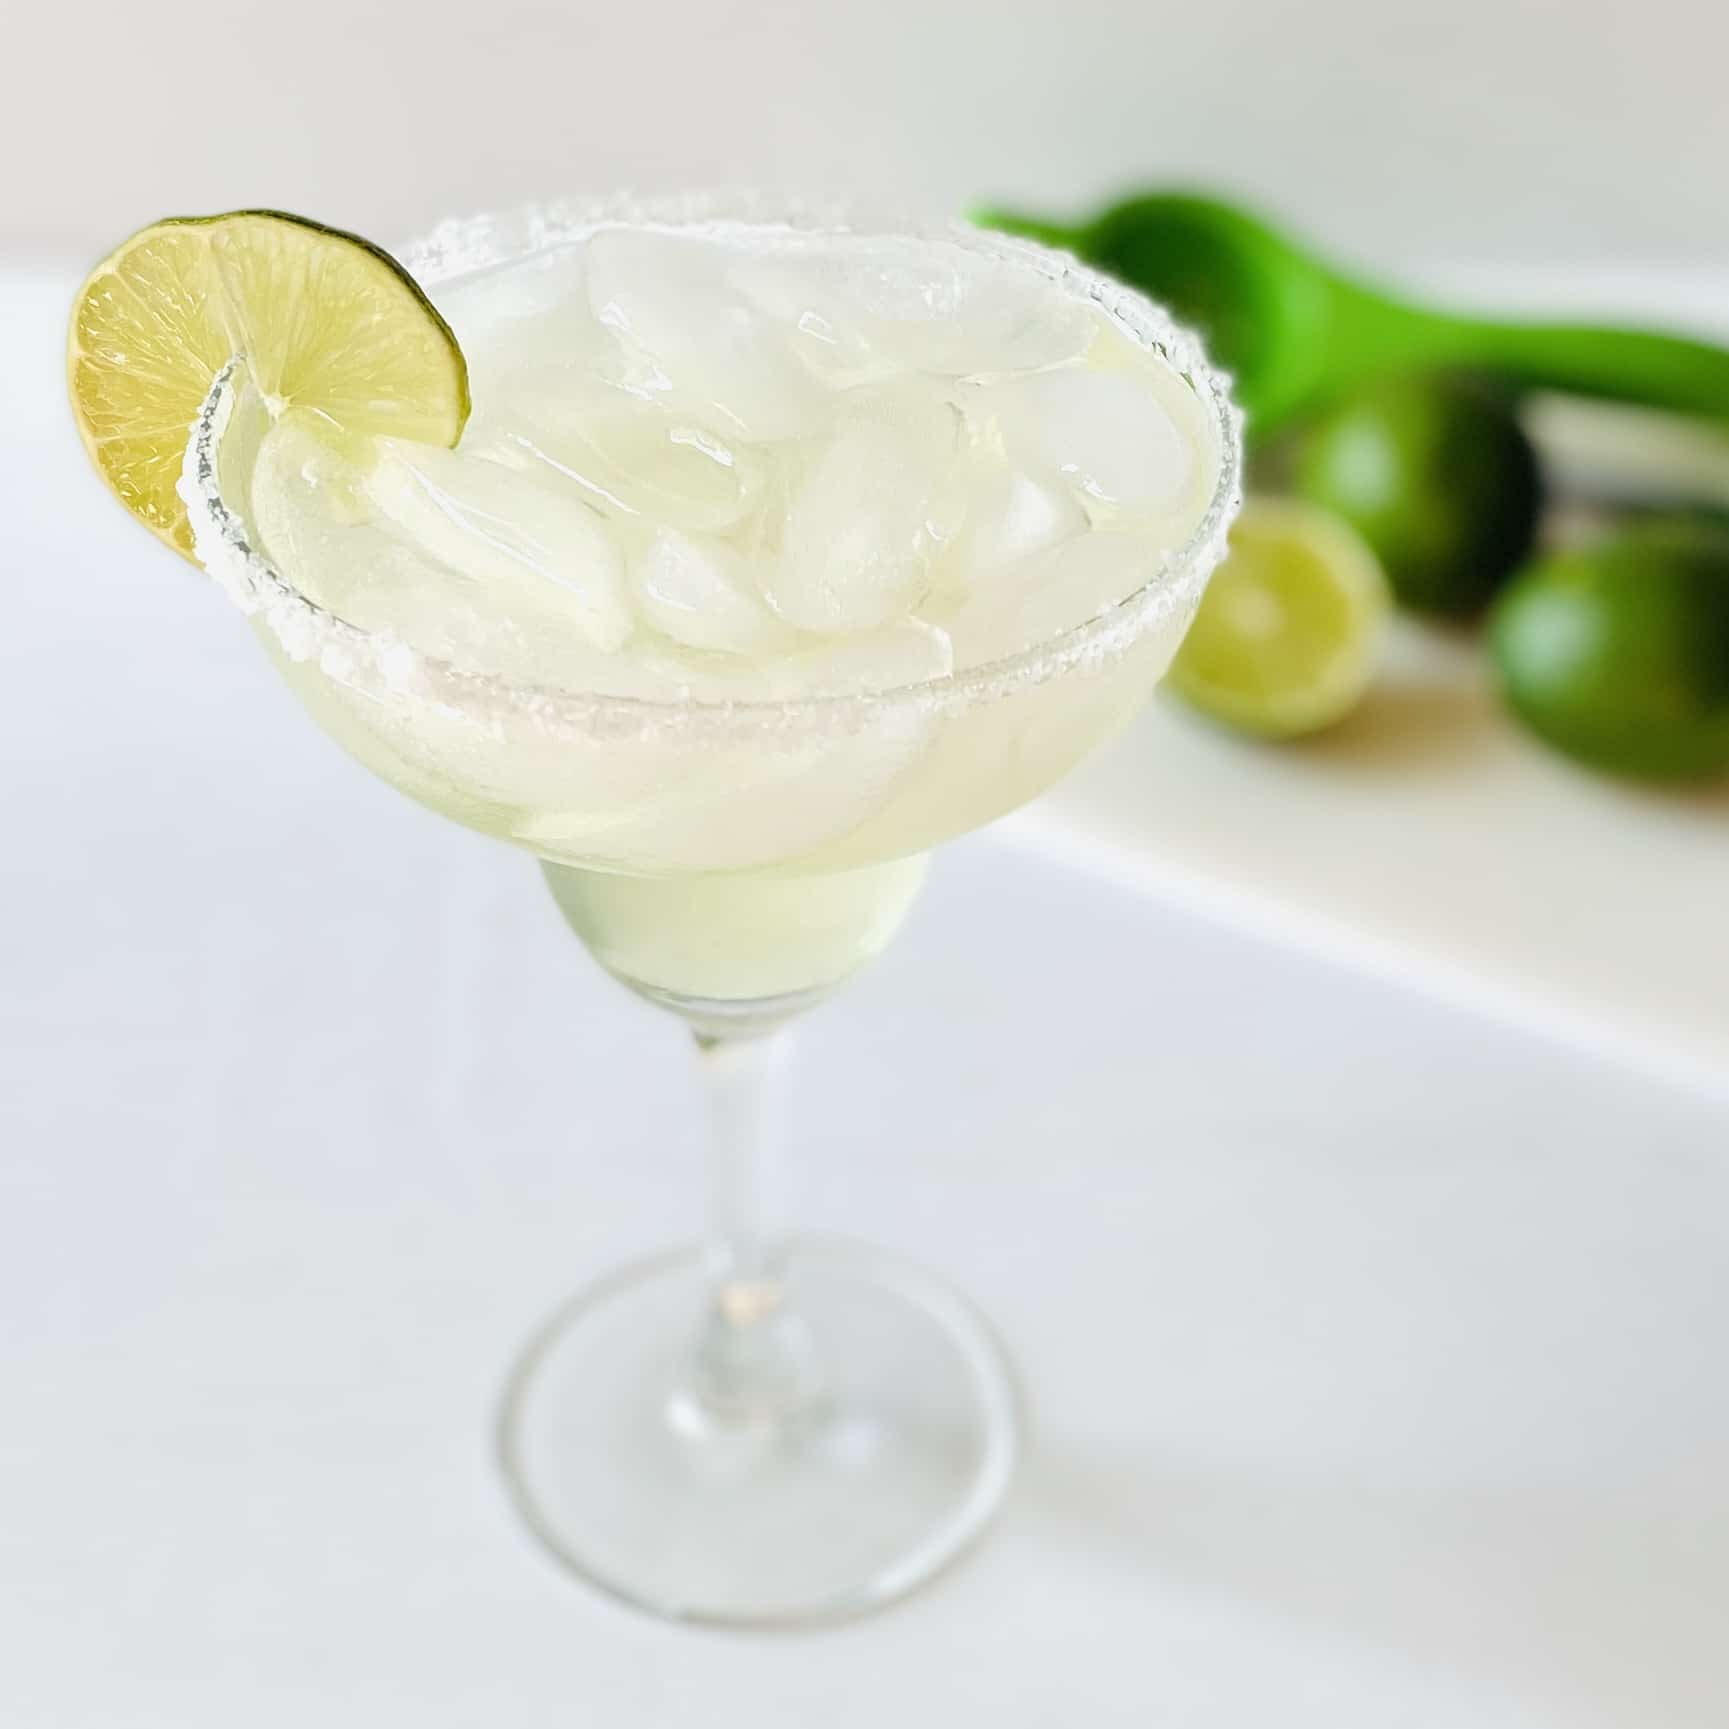 vodka-margarita-in-glass-limes-in-background